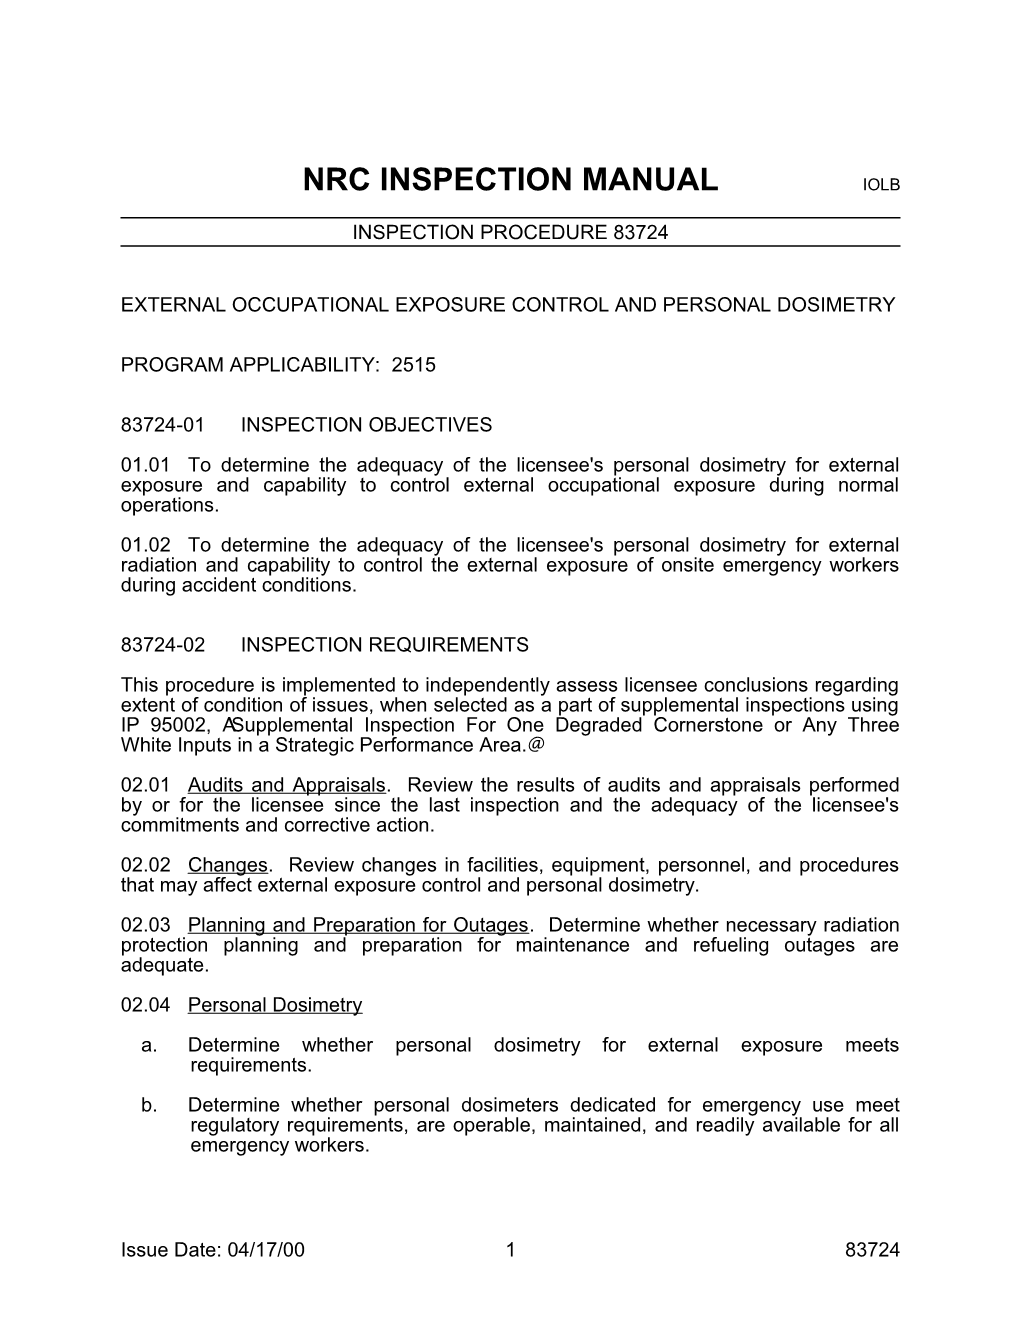 Nrc Inspection Manual Iolb